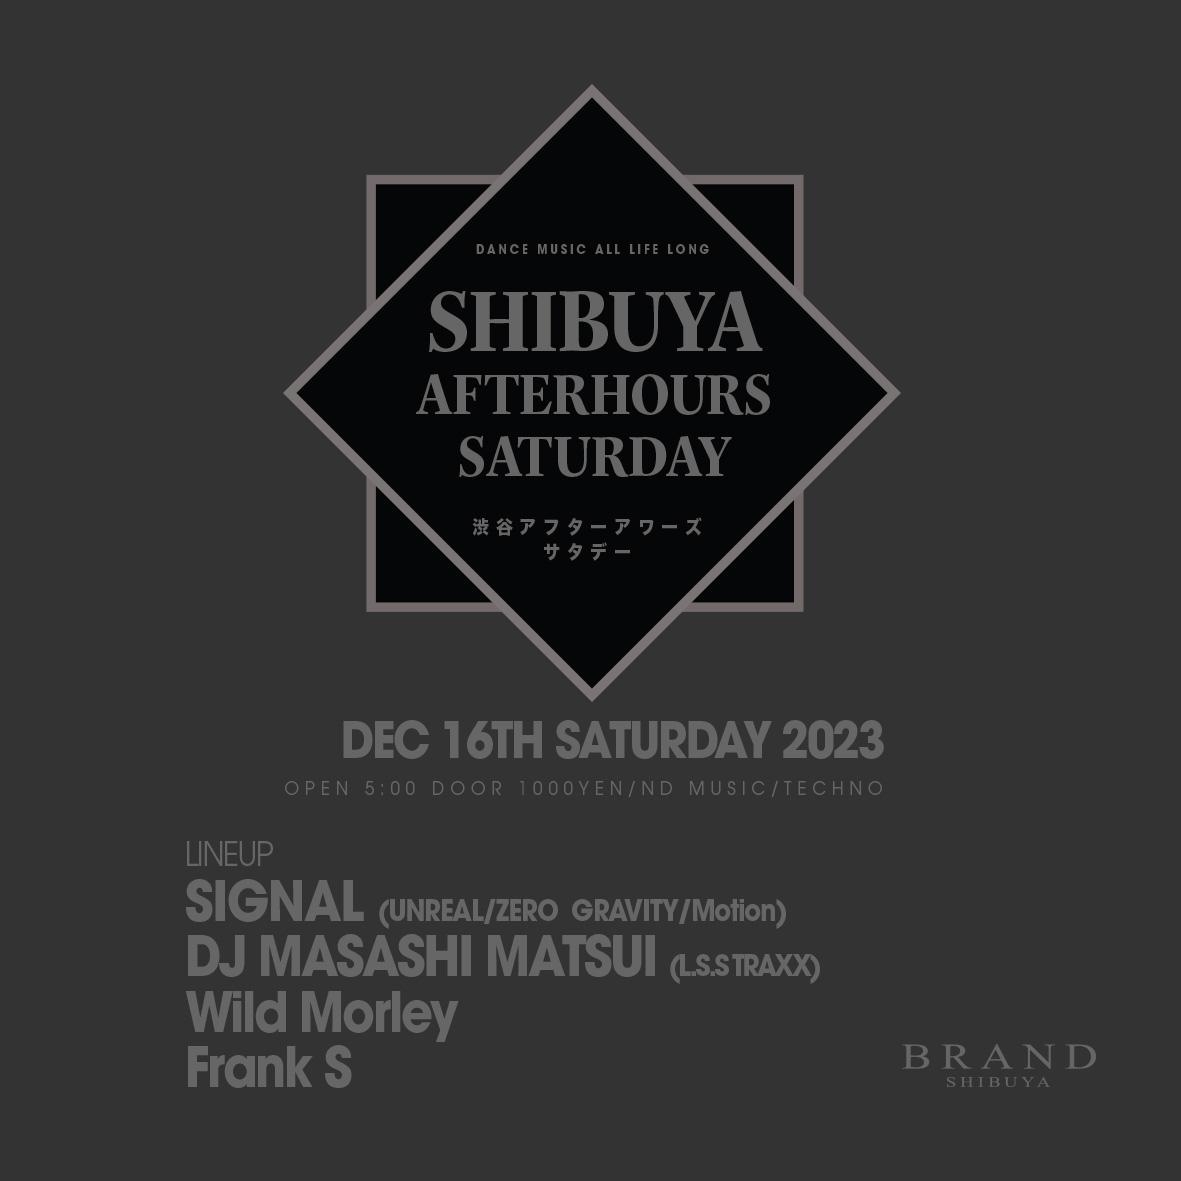 SHIBUYA AFTERHOURS SATURDAY 2023年12月16日（土曜日）に渋谷 クラブのBRAND SHIBUYAで開催されるTECHNOイベント